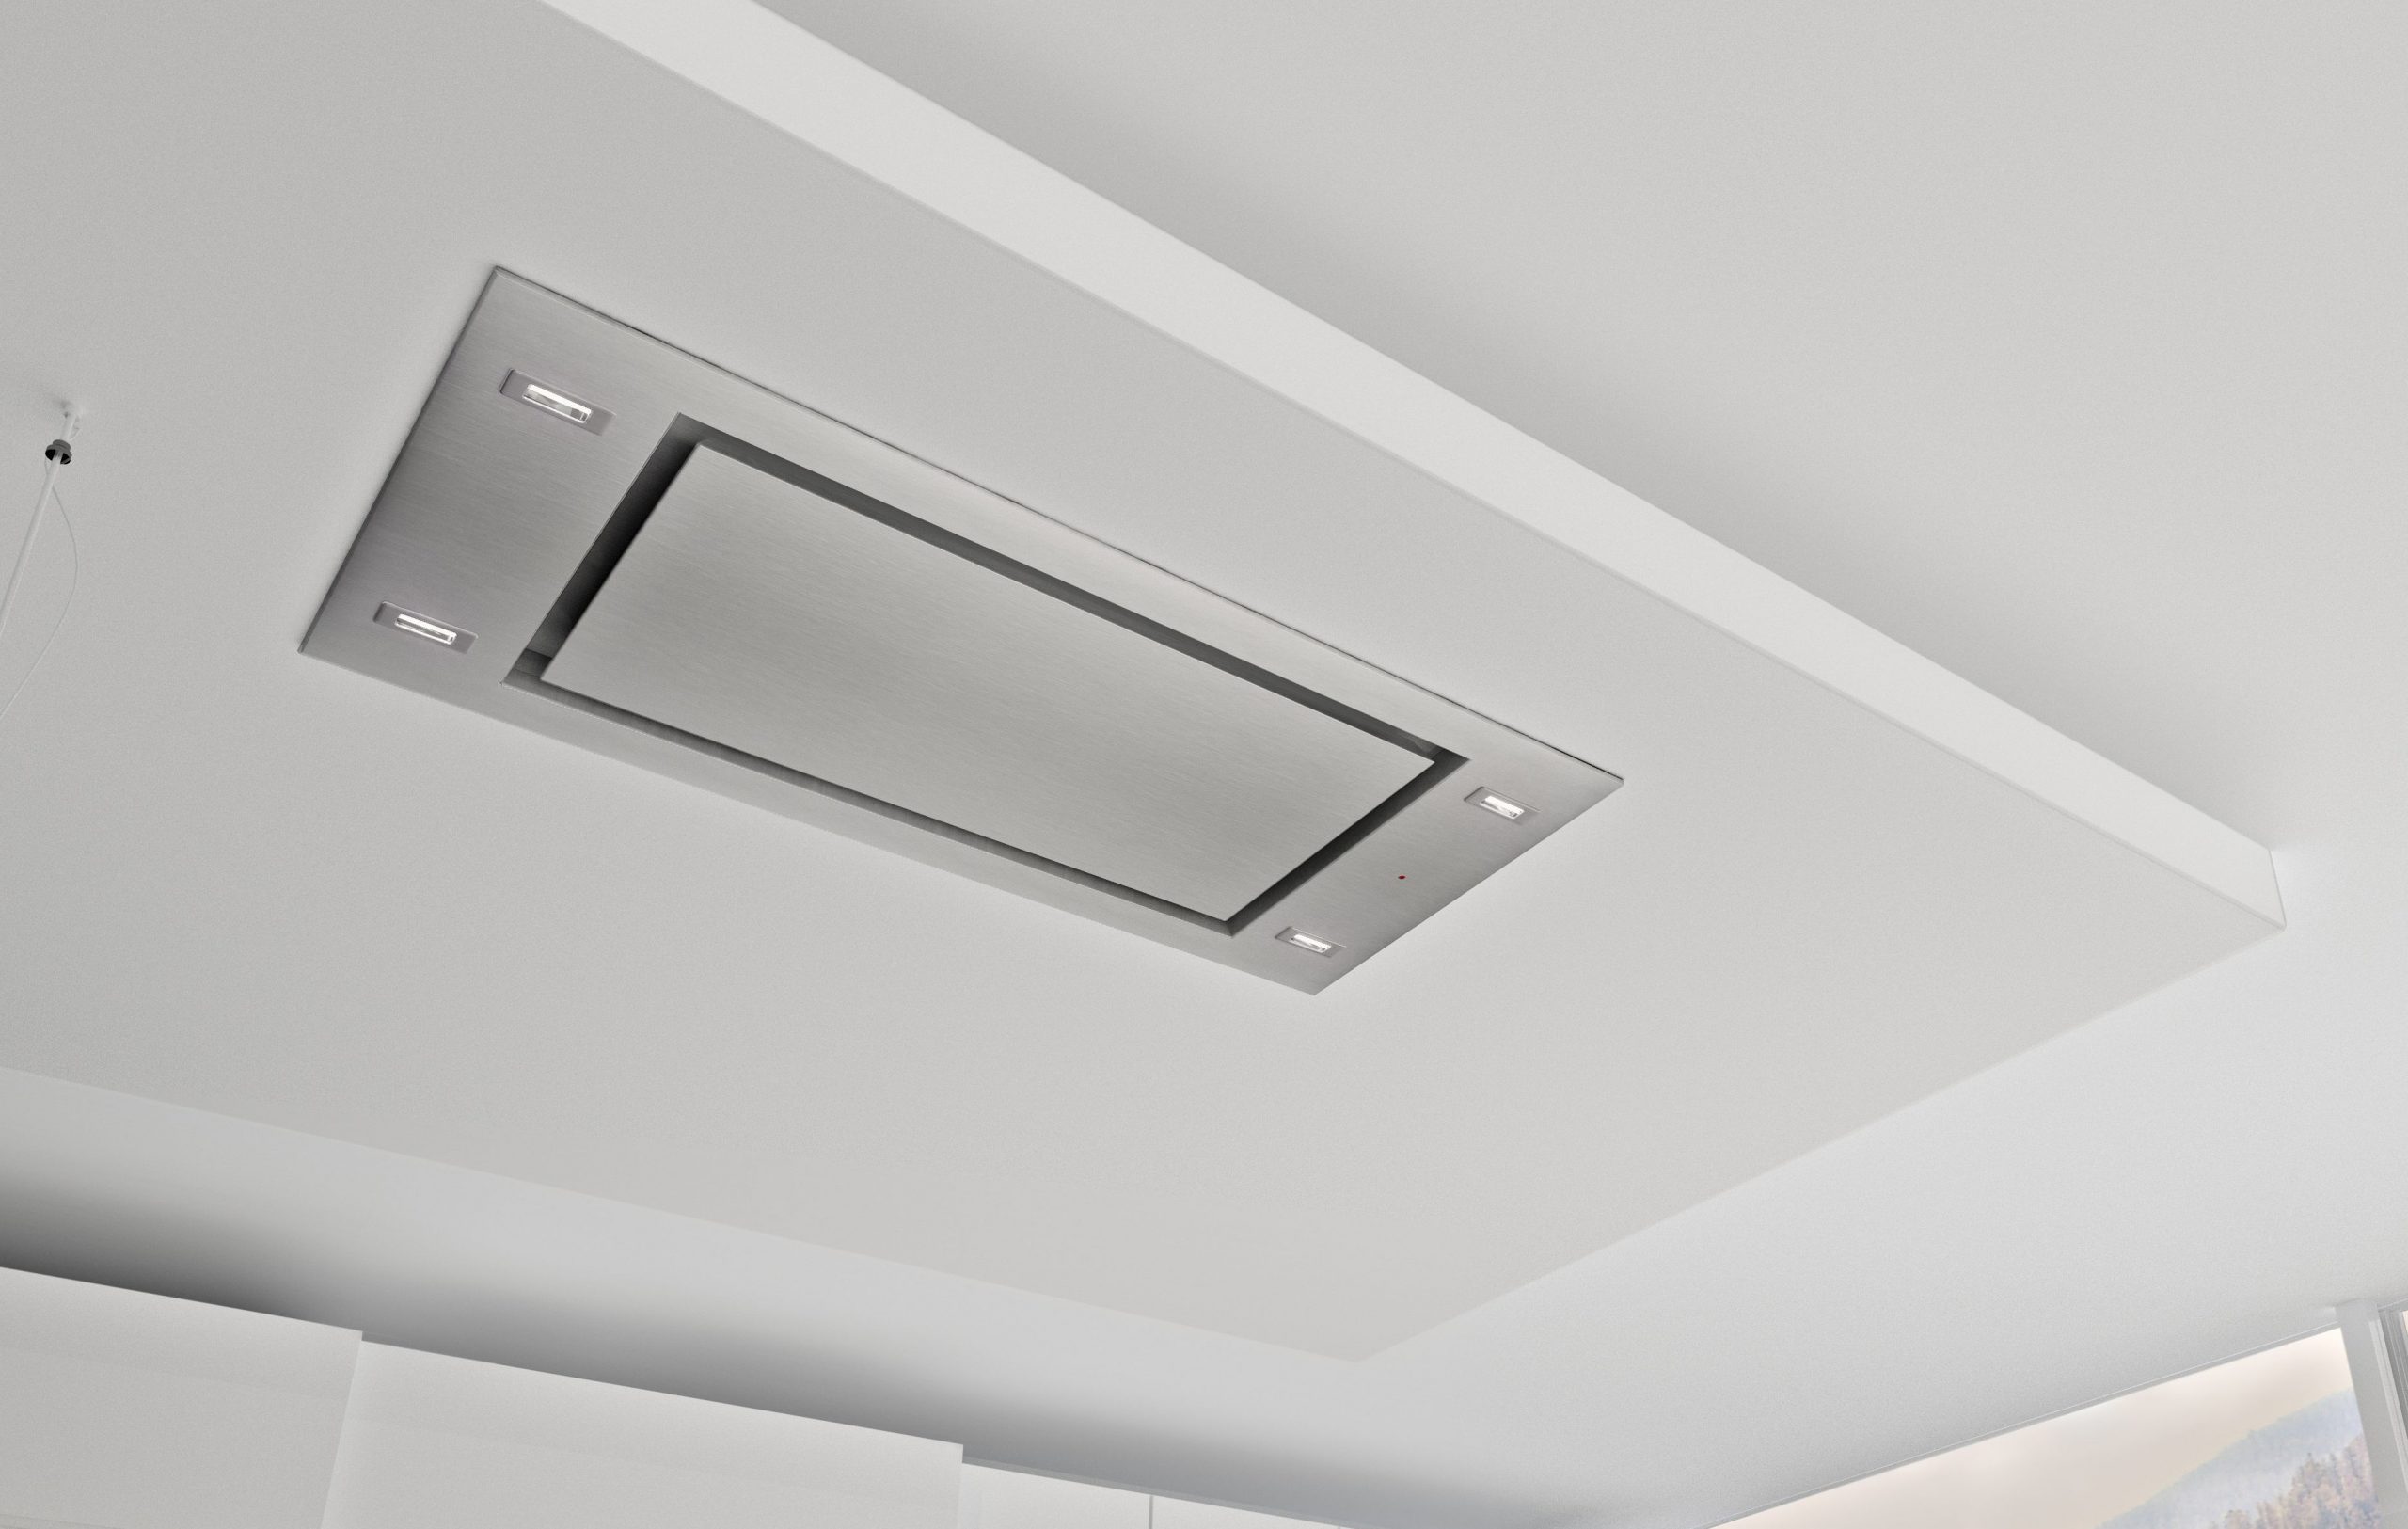 Rangehood Built Into Ceiling Bathroom Ventilation Fan intended for dimensions 3737 X 2372